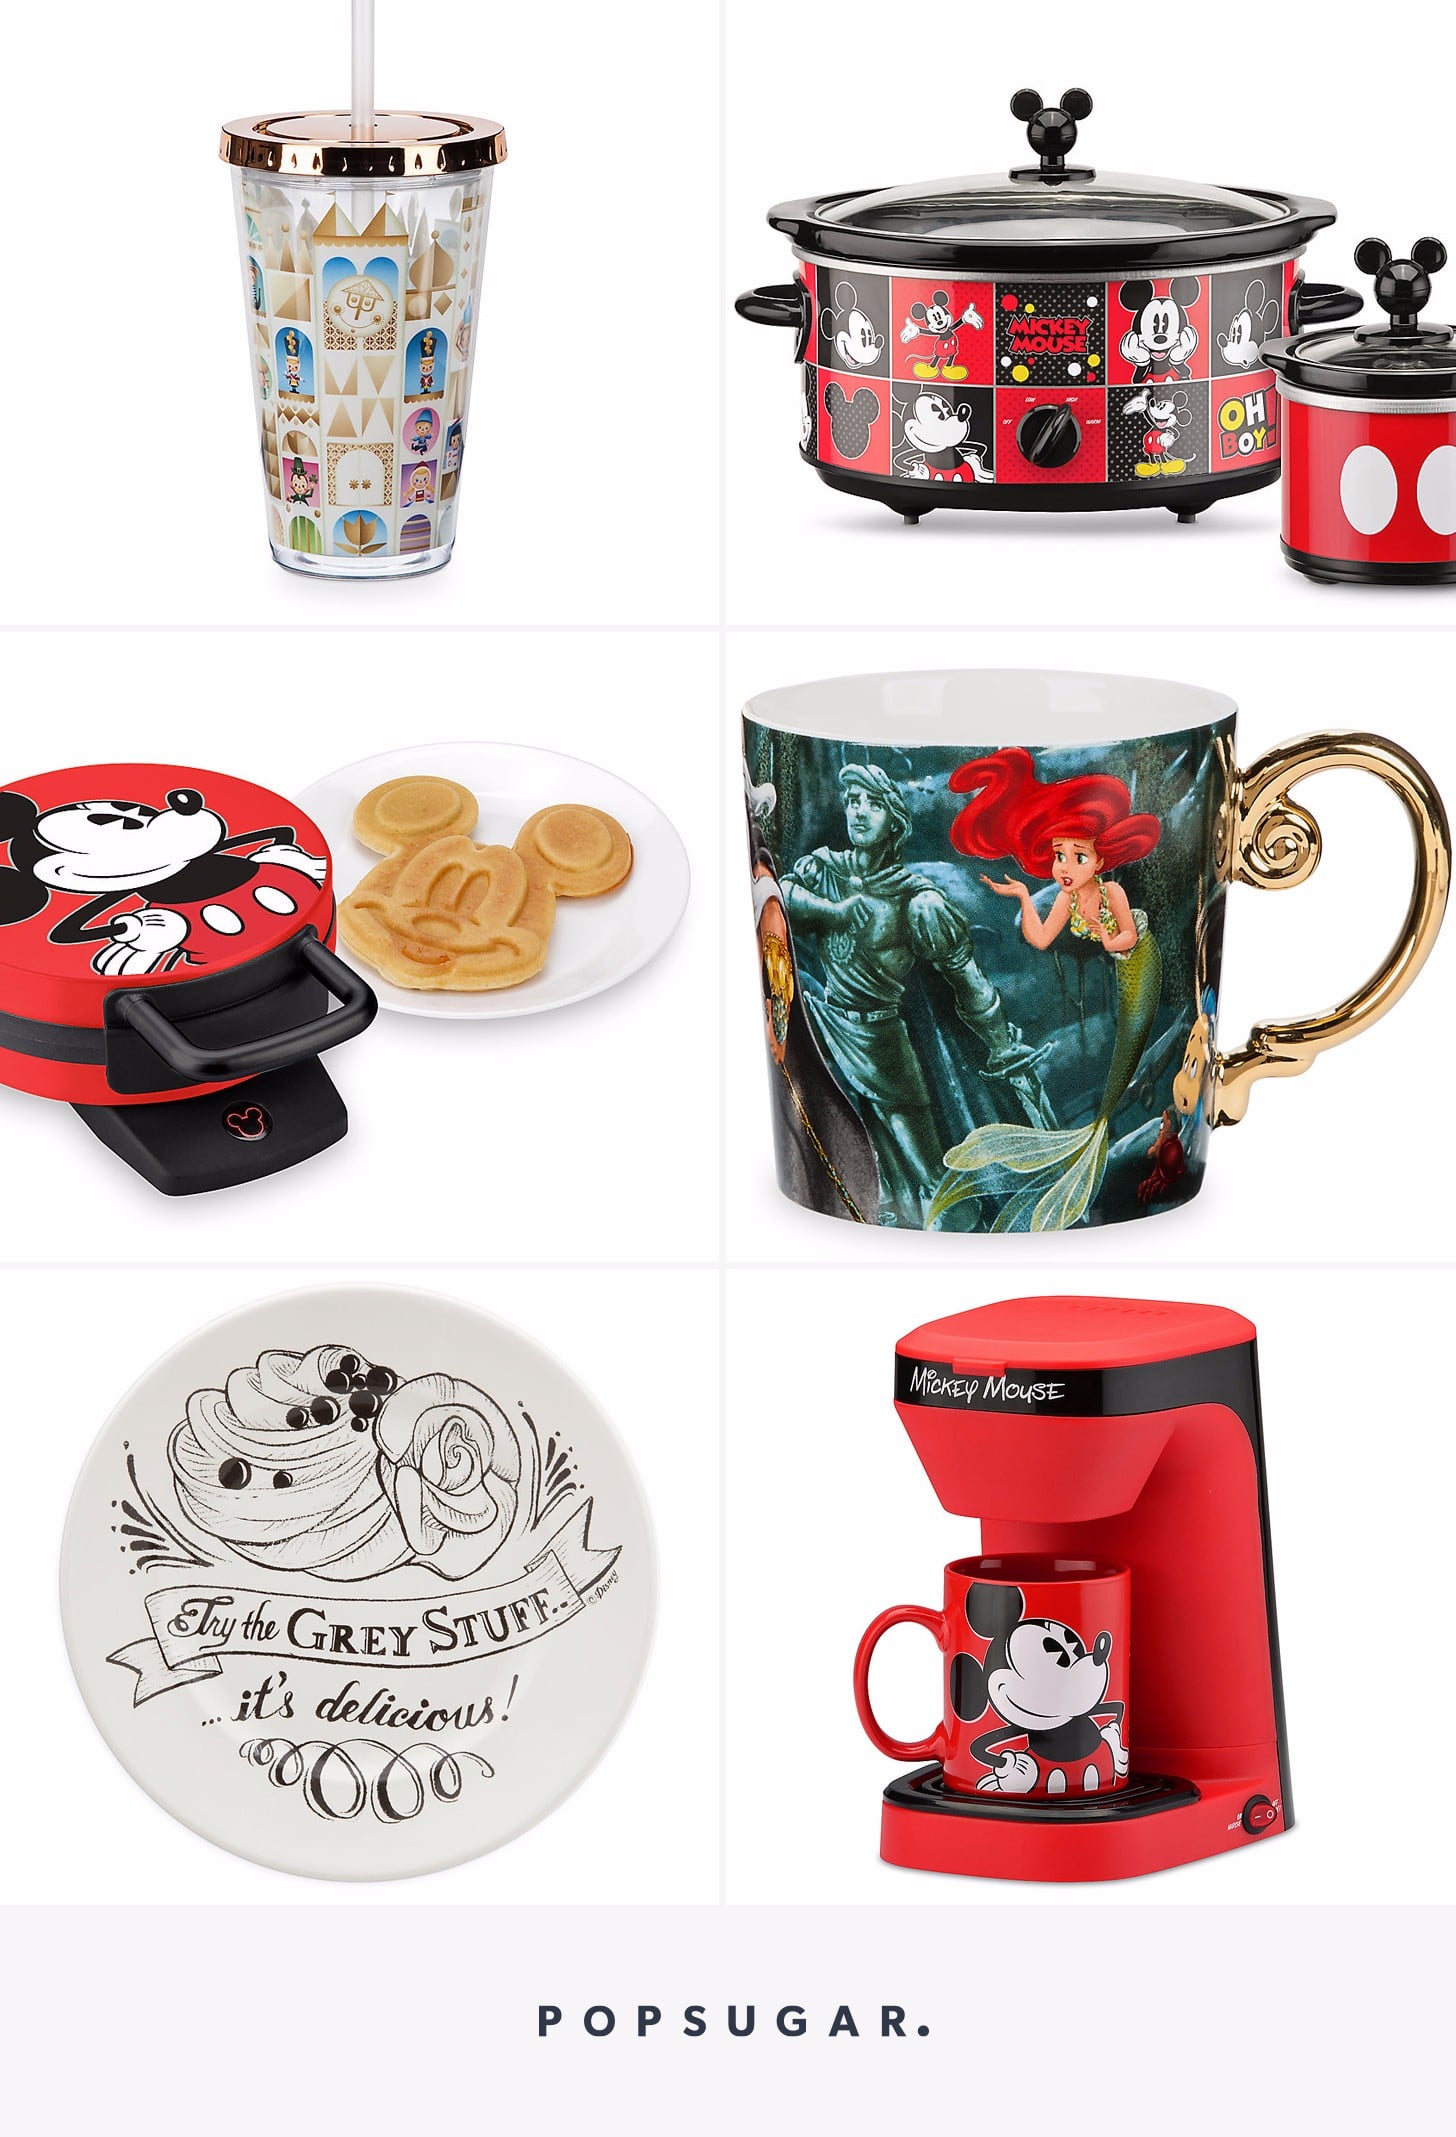 Disney, Kitchen, Disney Mickey Mouse Single Server Coffee Maker